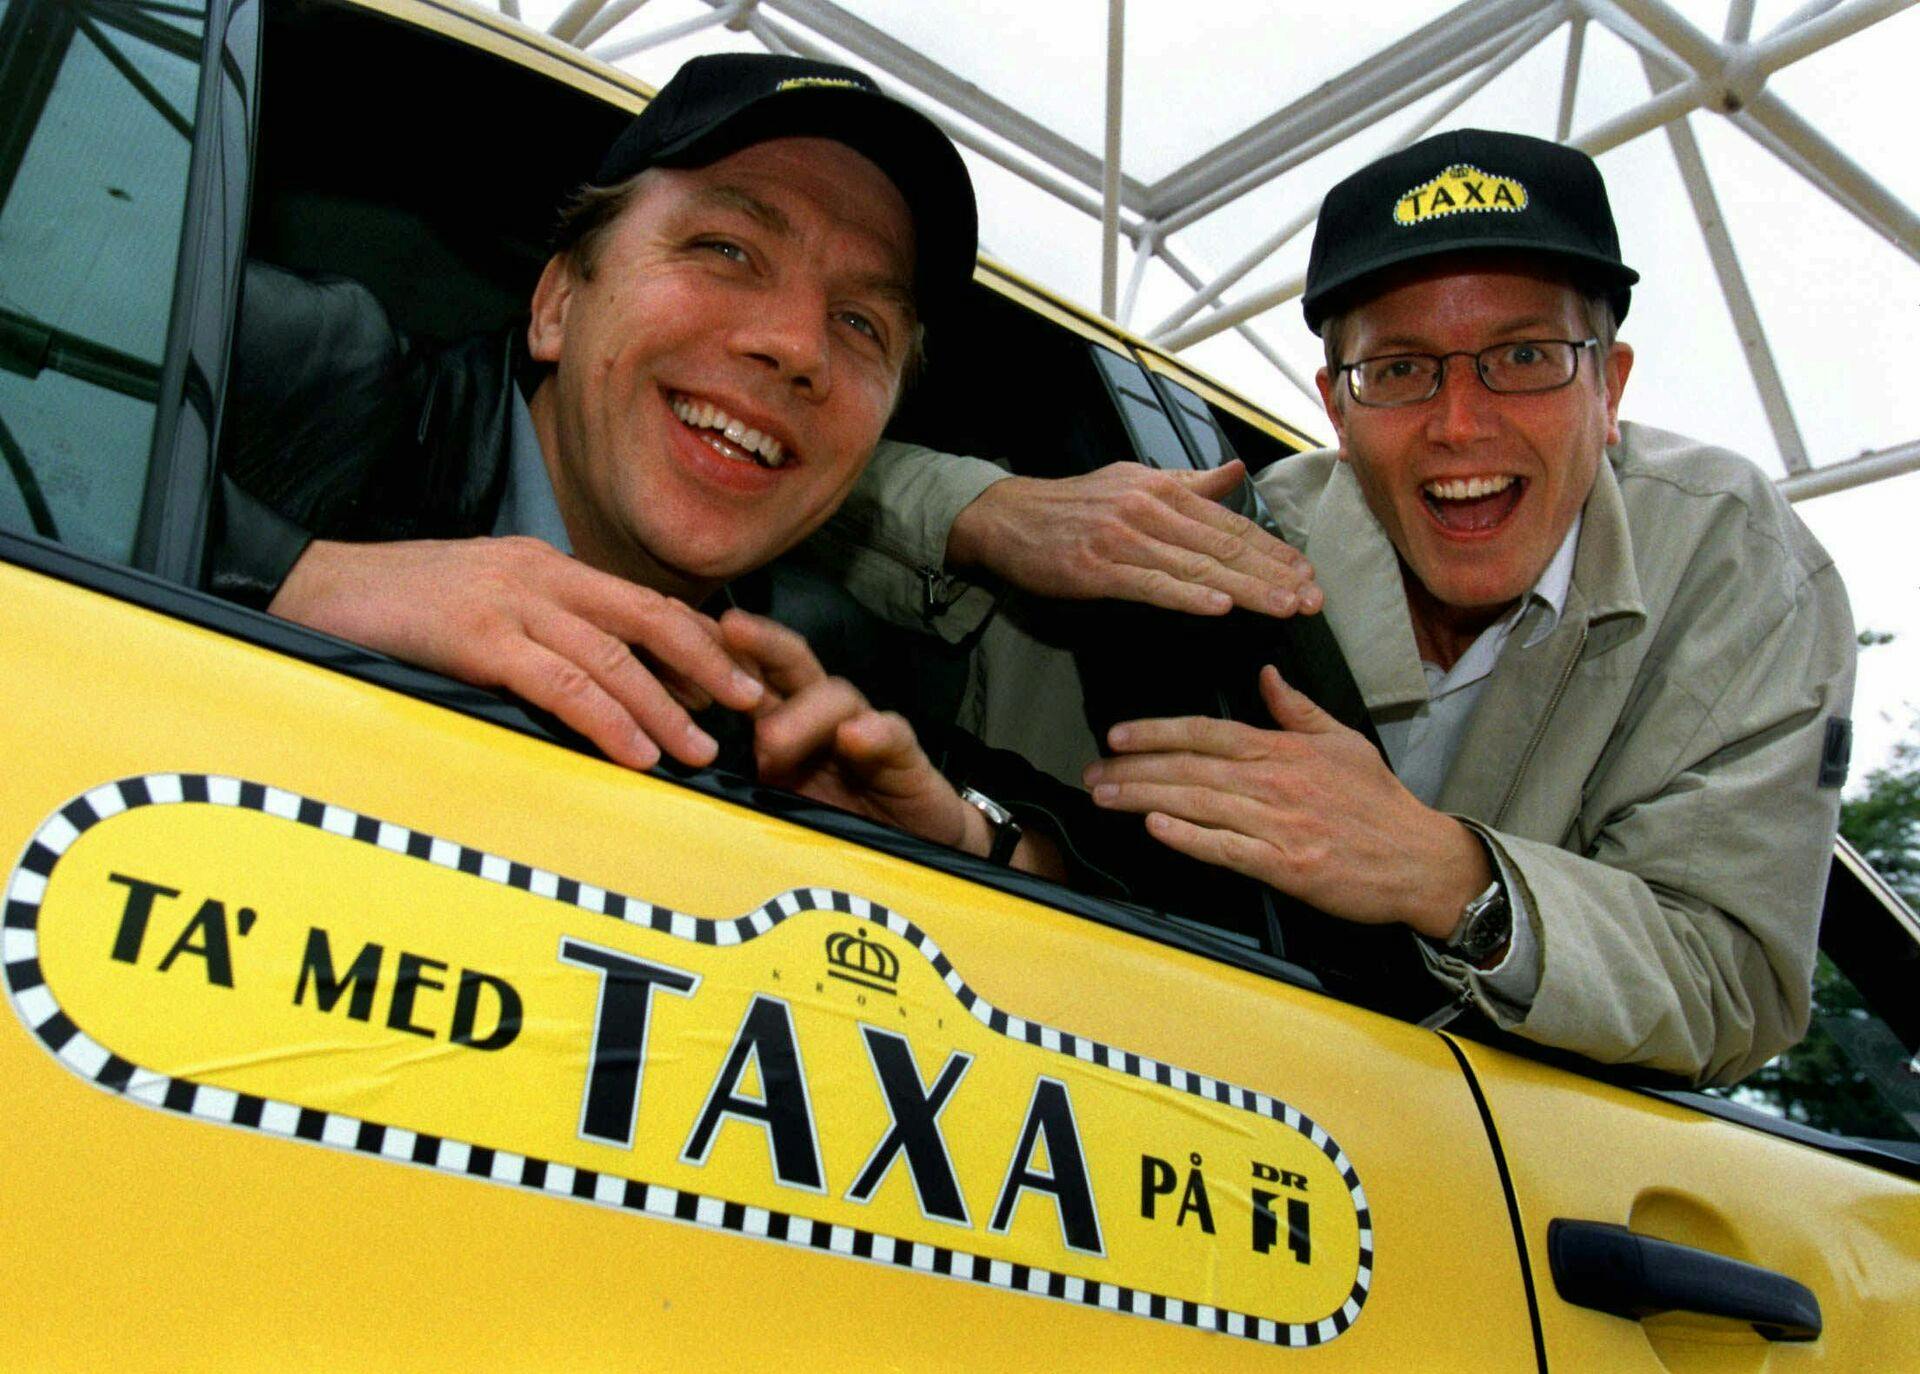 Jesper Lohmann og Peter Mygind spillede sammen i den populære serie Taxa.
